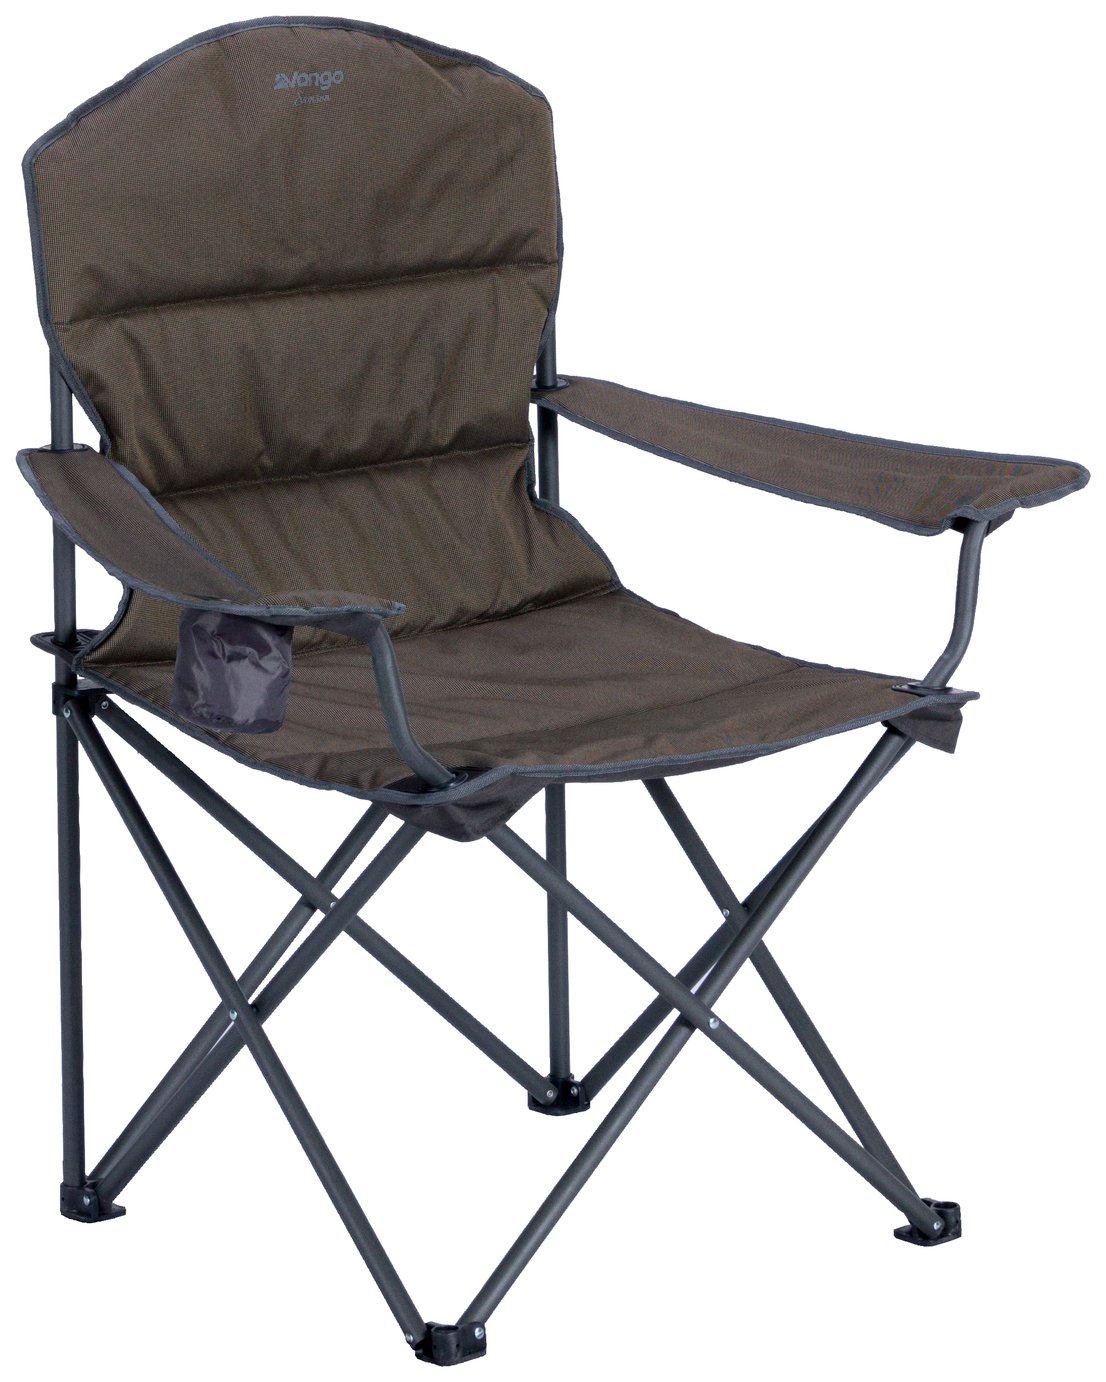 Buy Vango Samson Camping Chair 